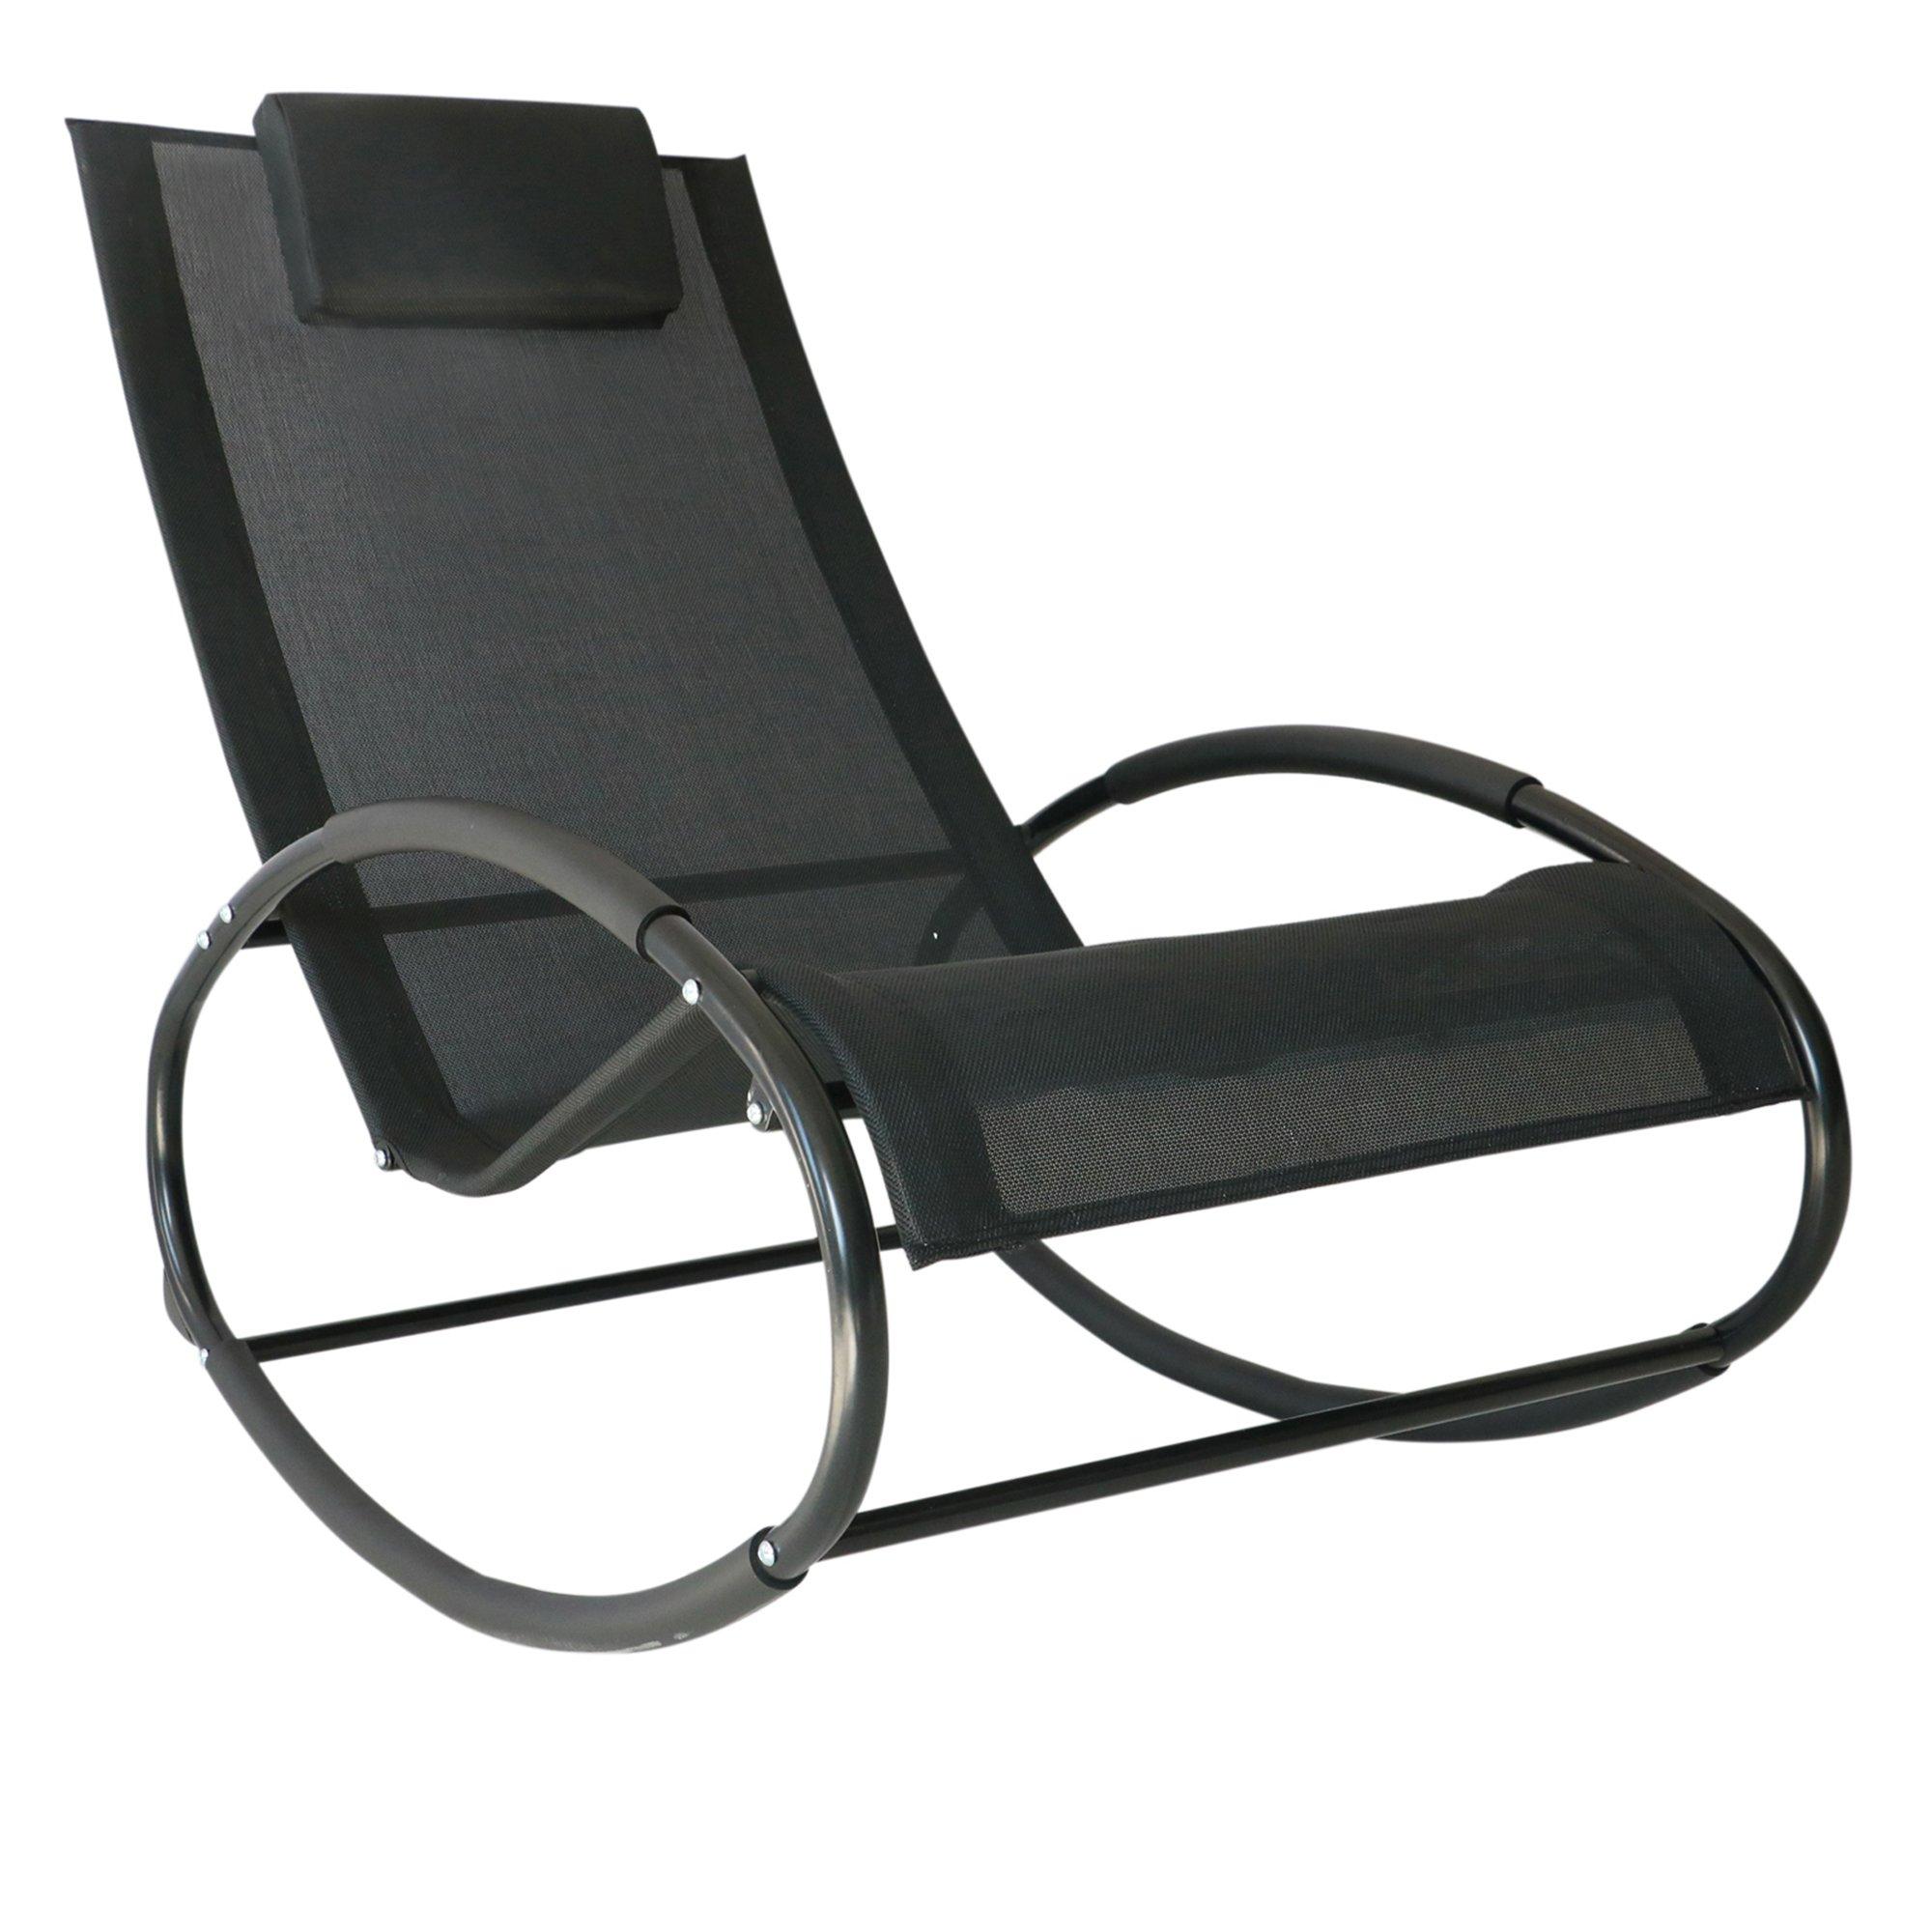 Patio Rocking Chair Orbital Zero Gravity Seat Pool Chaise with Pillow